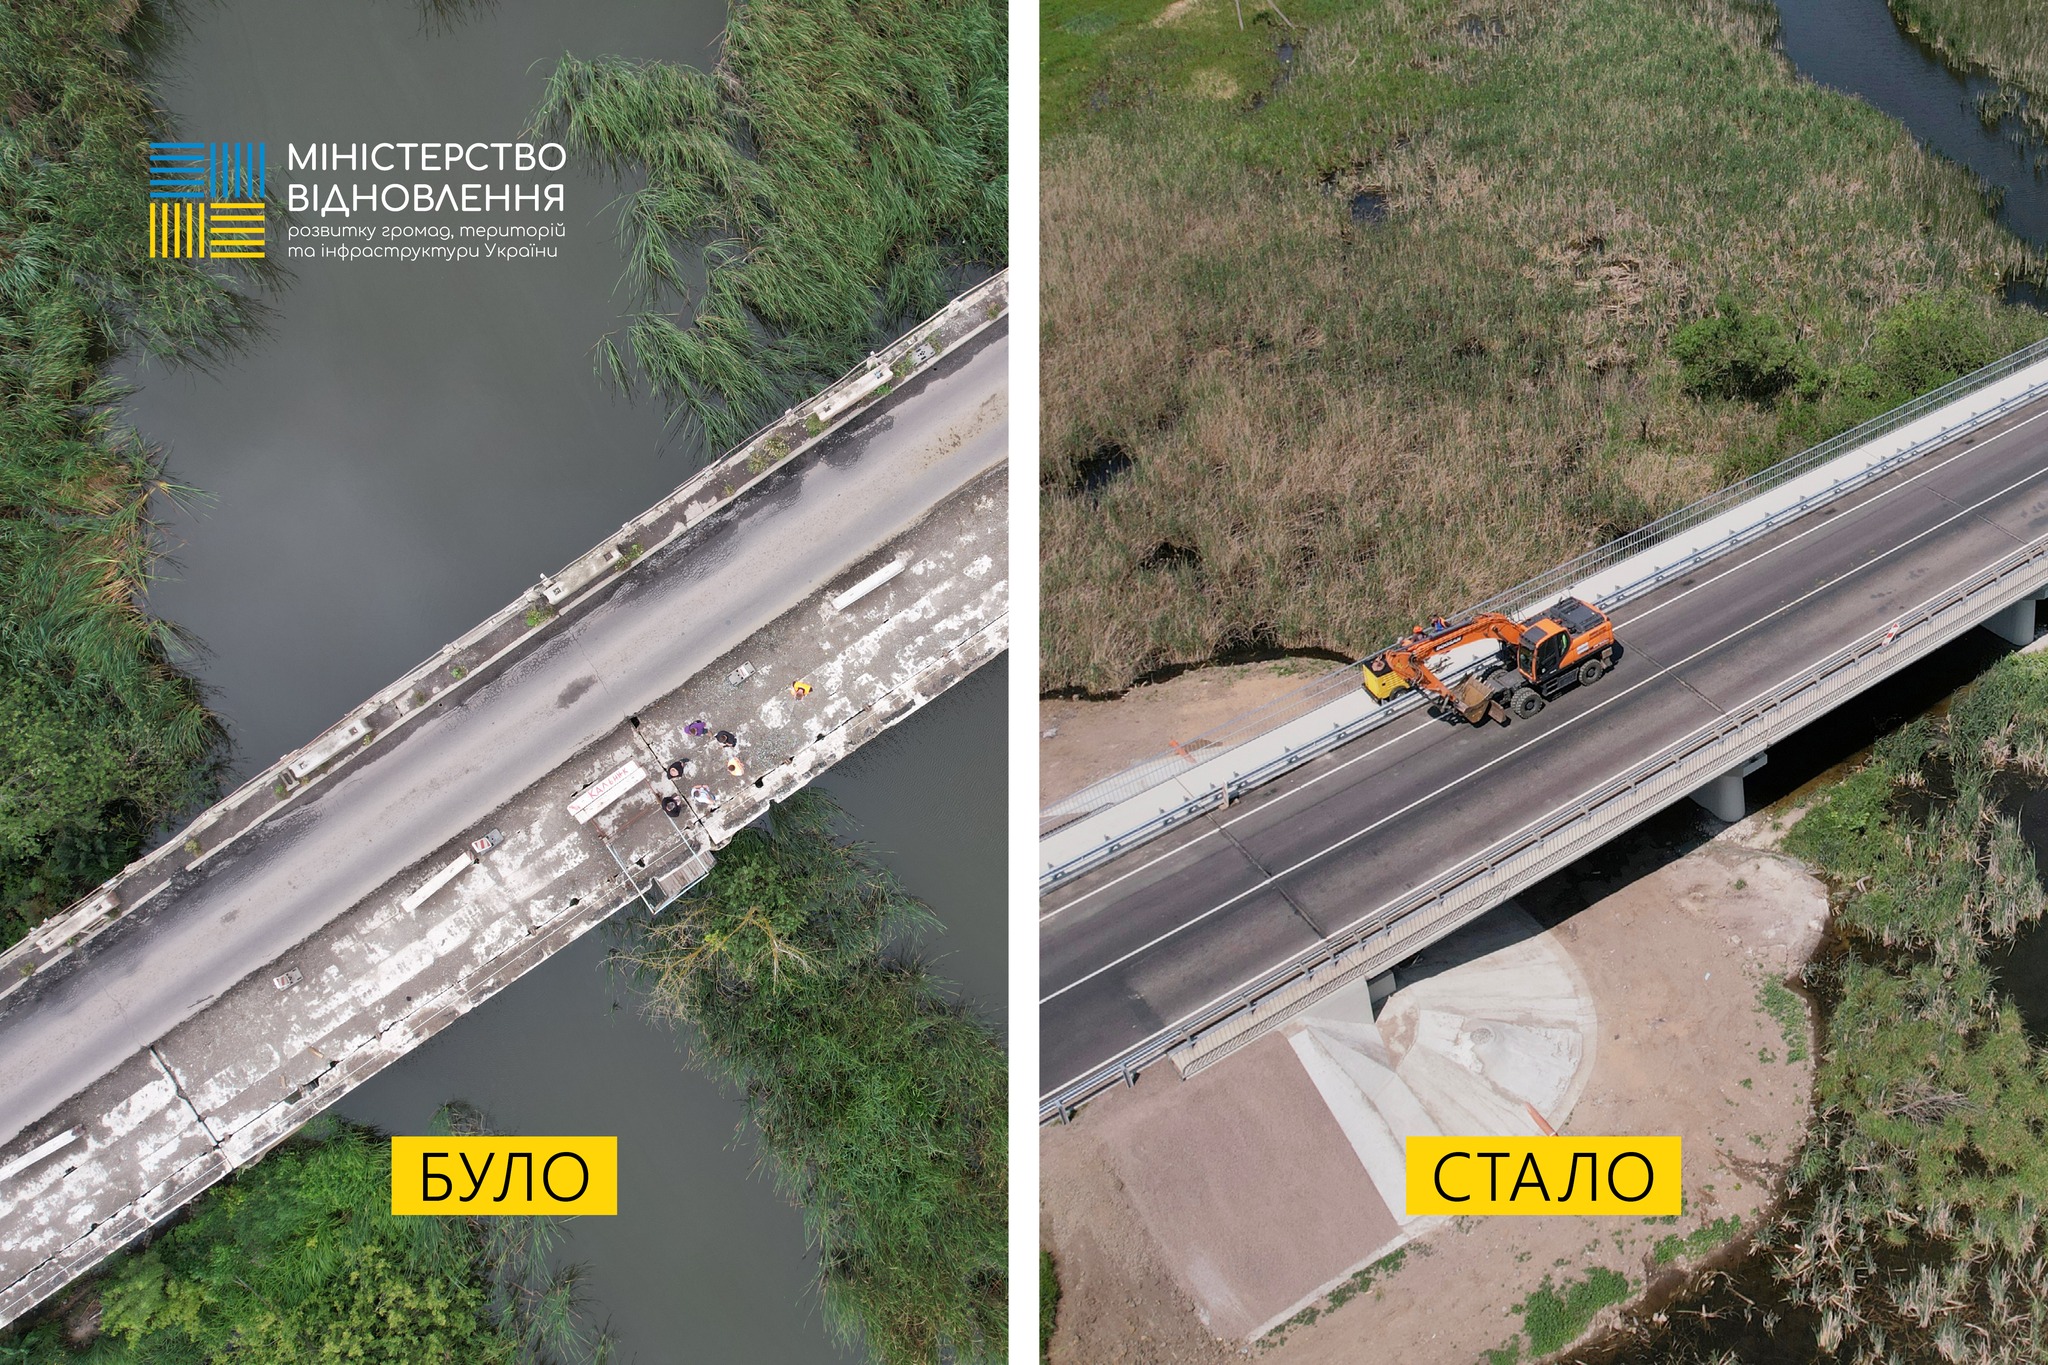 In Vinnytsia, a 100-meter-long road was repaired across the river Sib